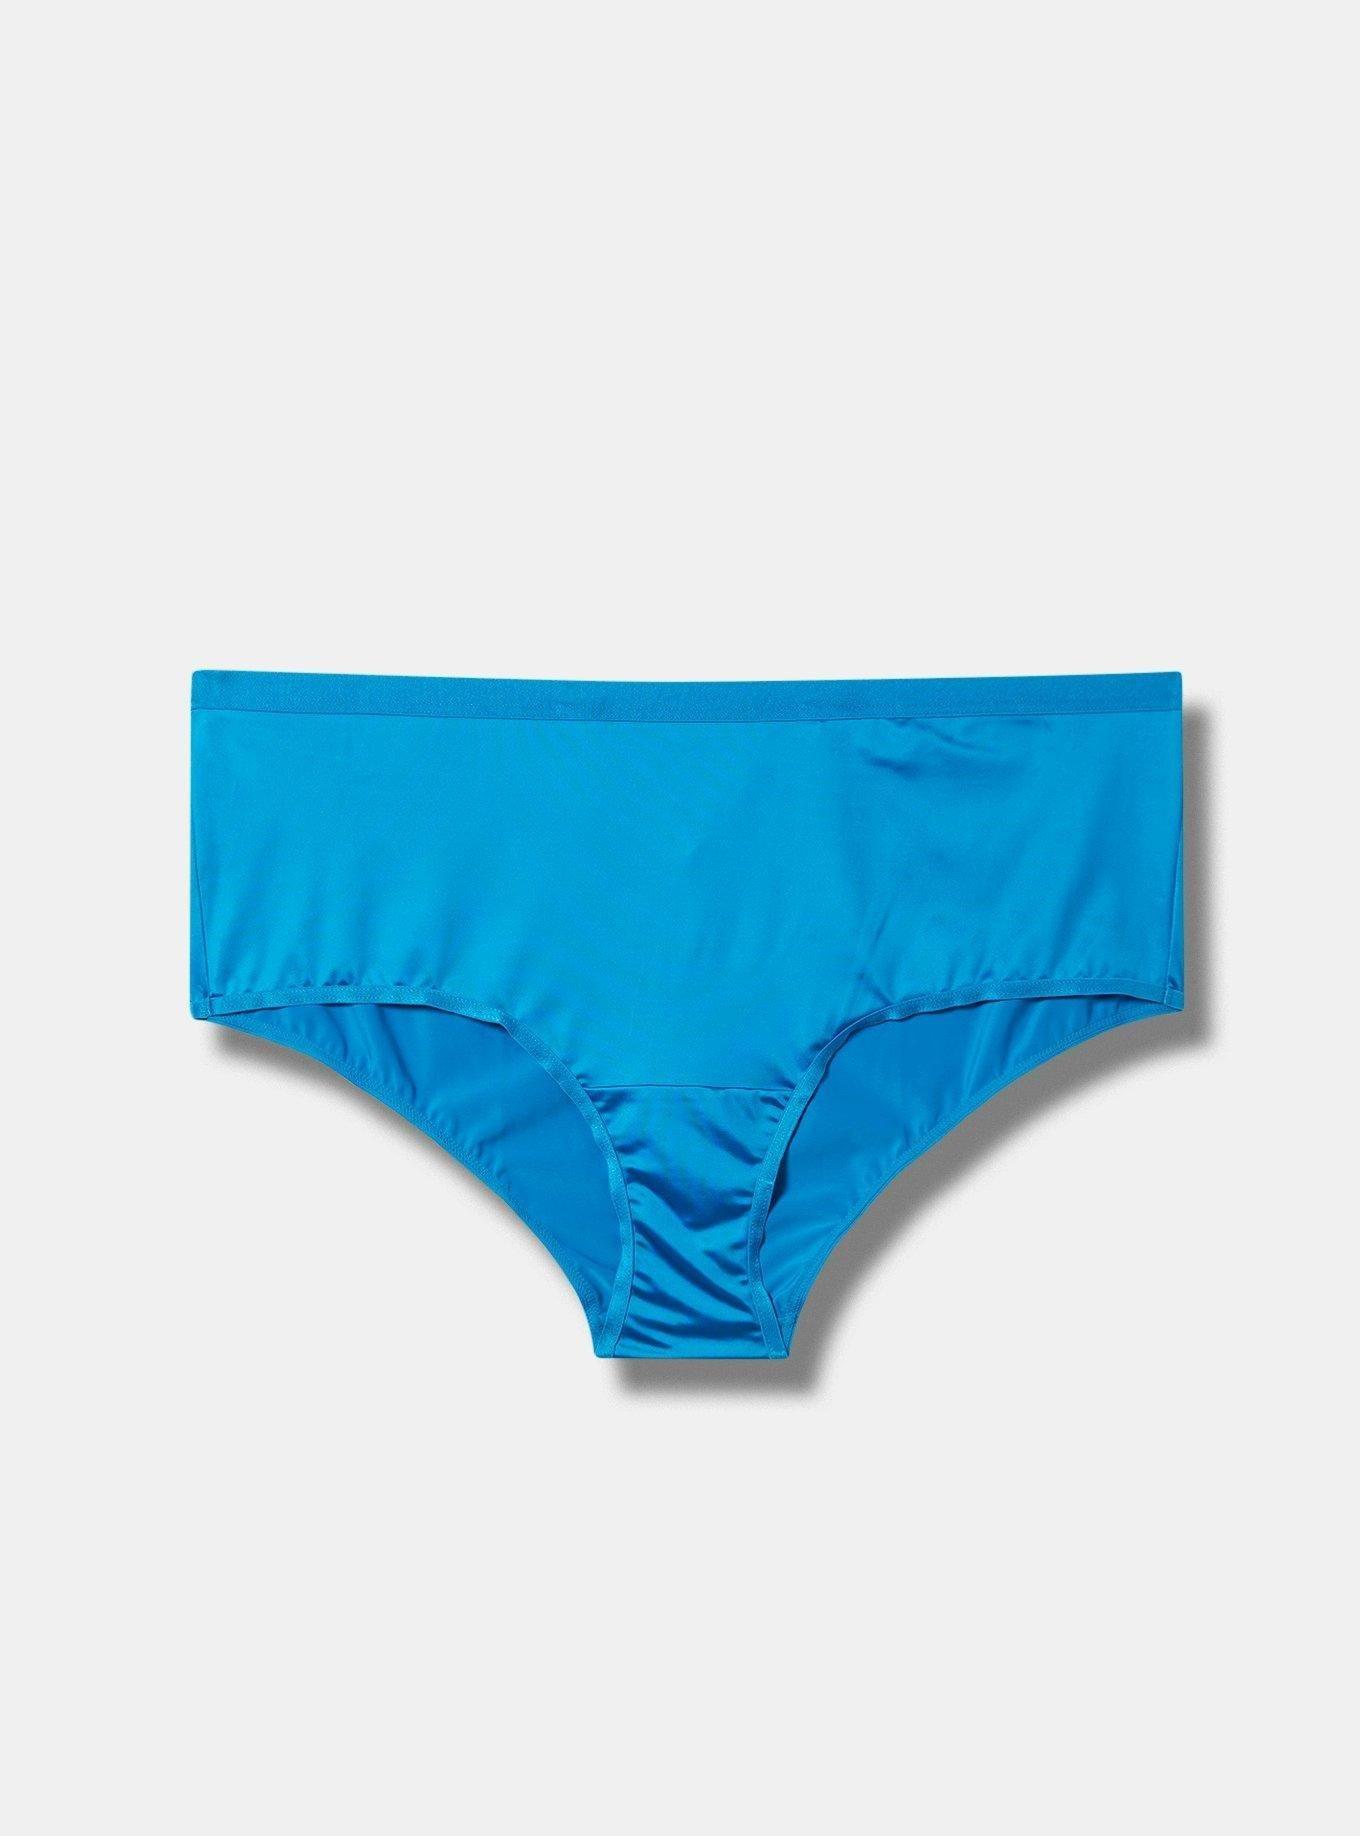 Plus Size - Teal Microfiber & Lace Cheeky Panty - Torrid